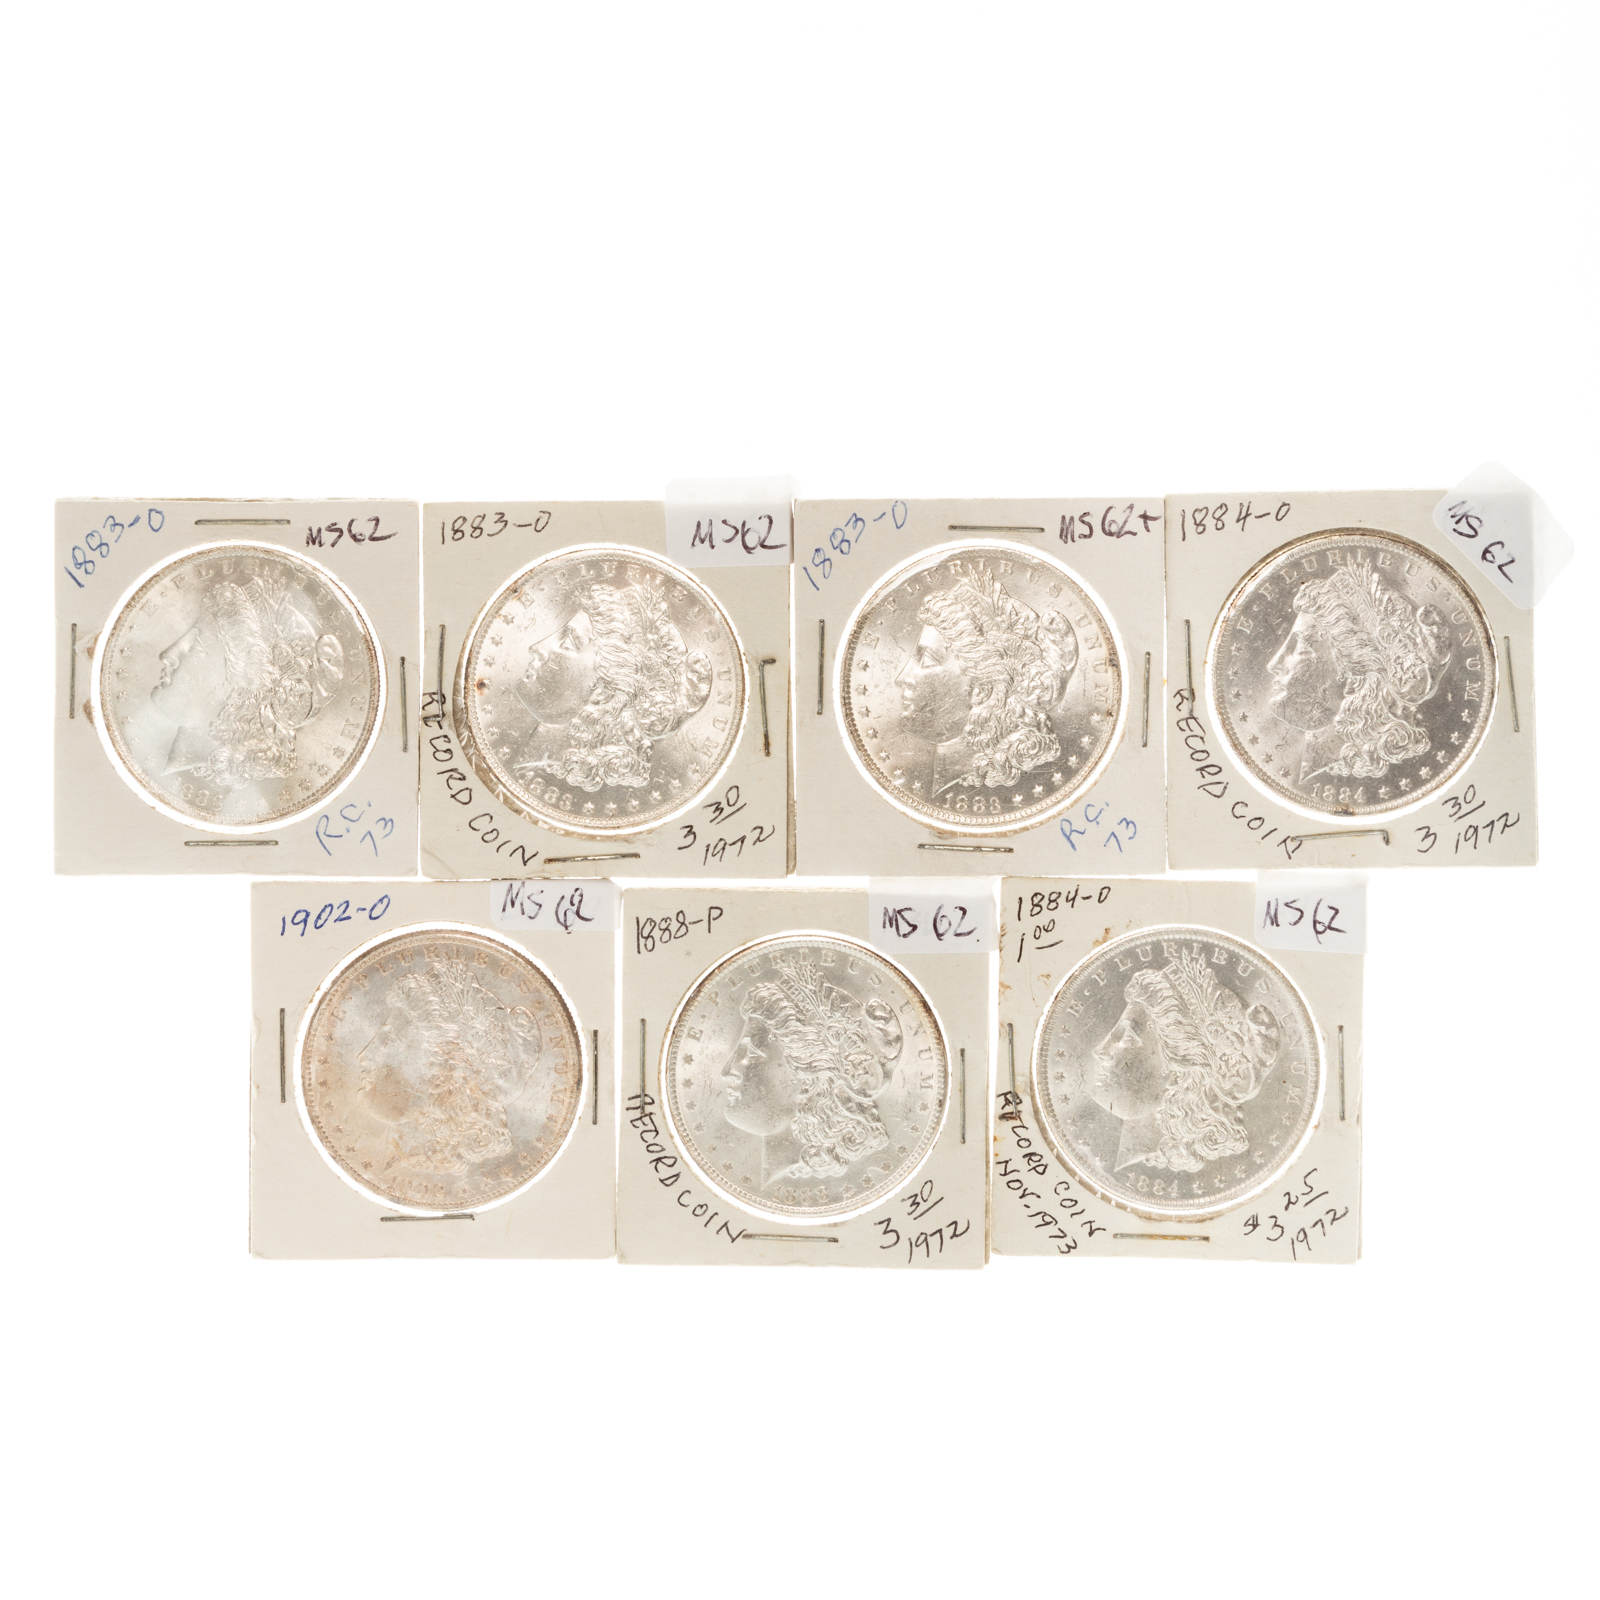 SEVEN MS62 MORGAN DOLLARS 1883-O,